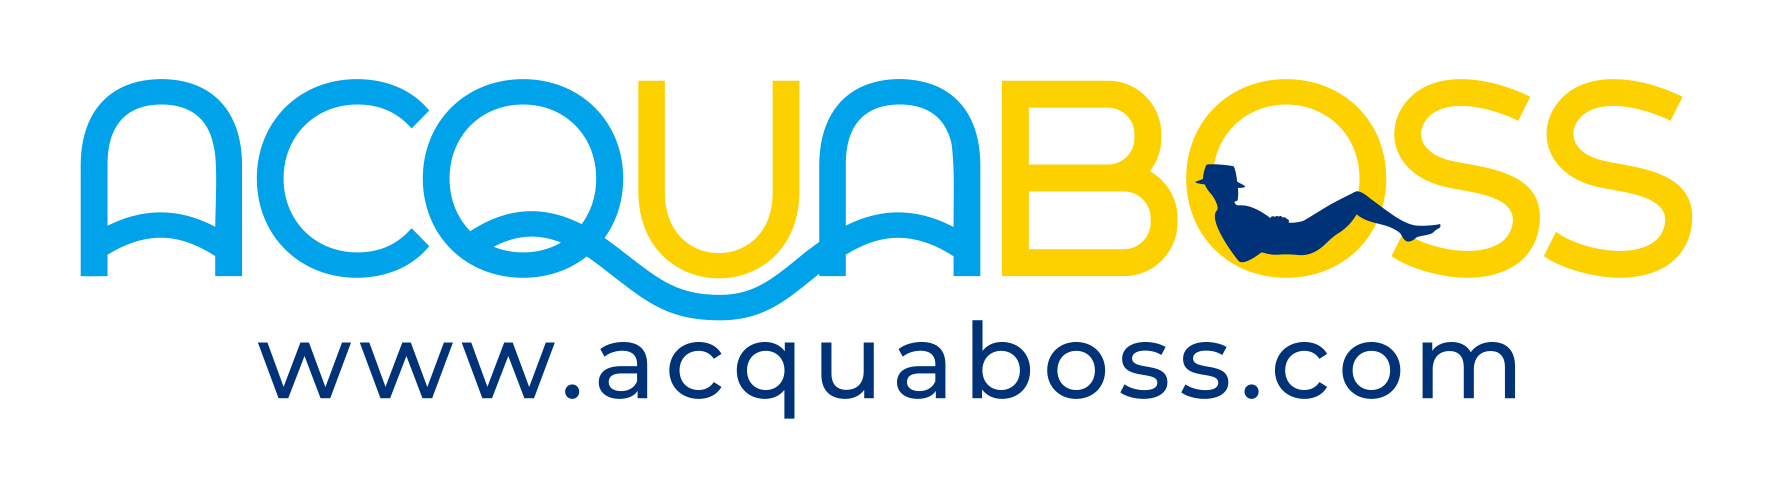 Acquaboss logo